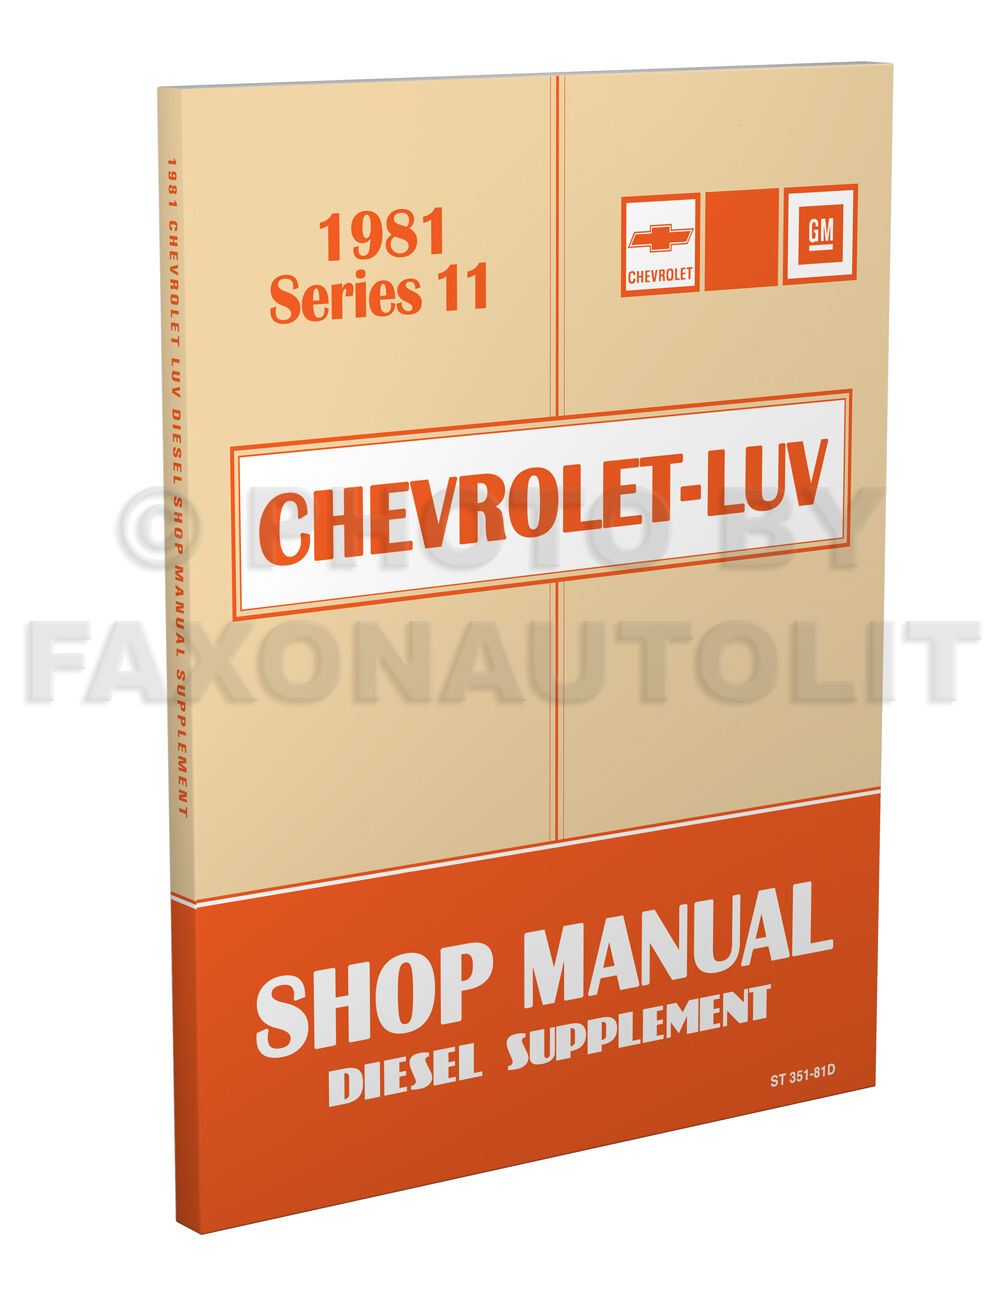 1981 Chevy Luv Diesel Engine Shop Manual Isuzu Pickup Repair Service 2.2 Liter